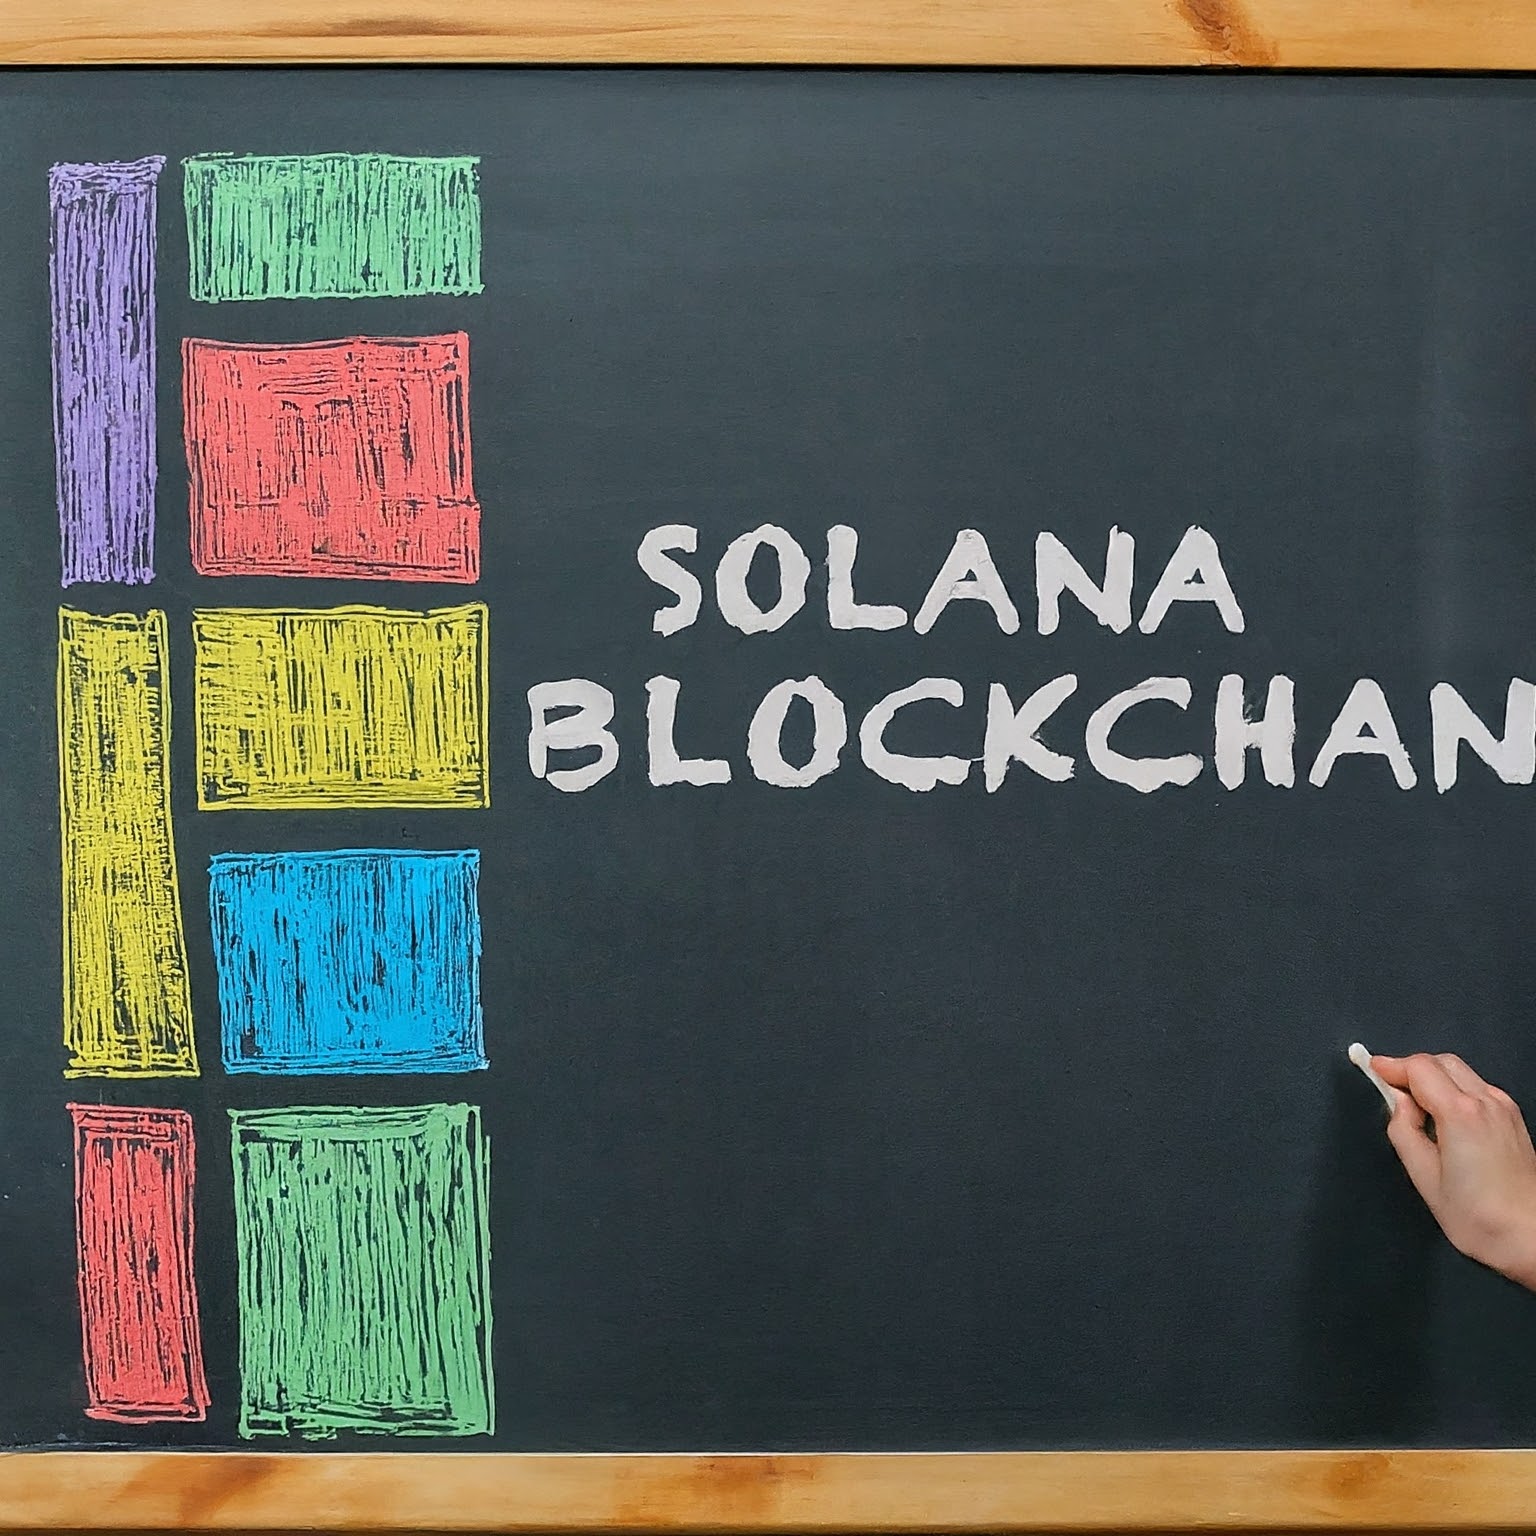 What is Solana Blockchain?